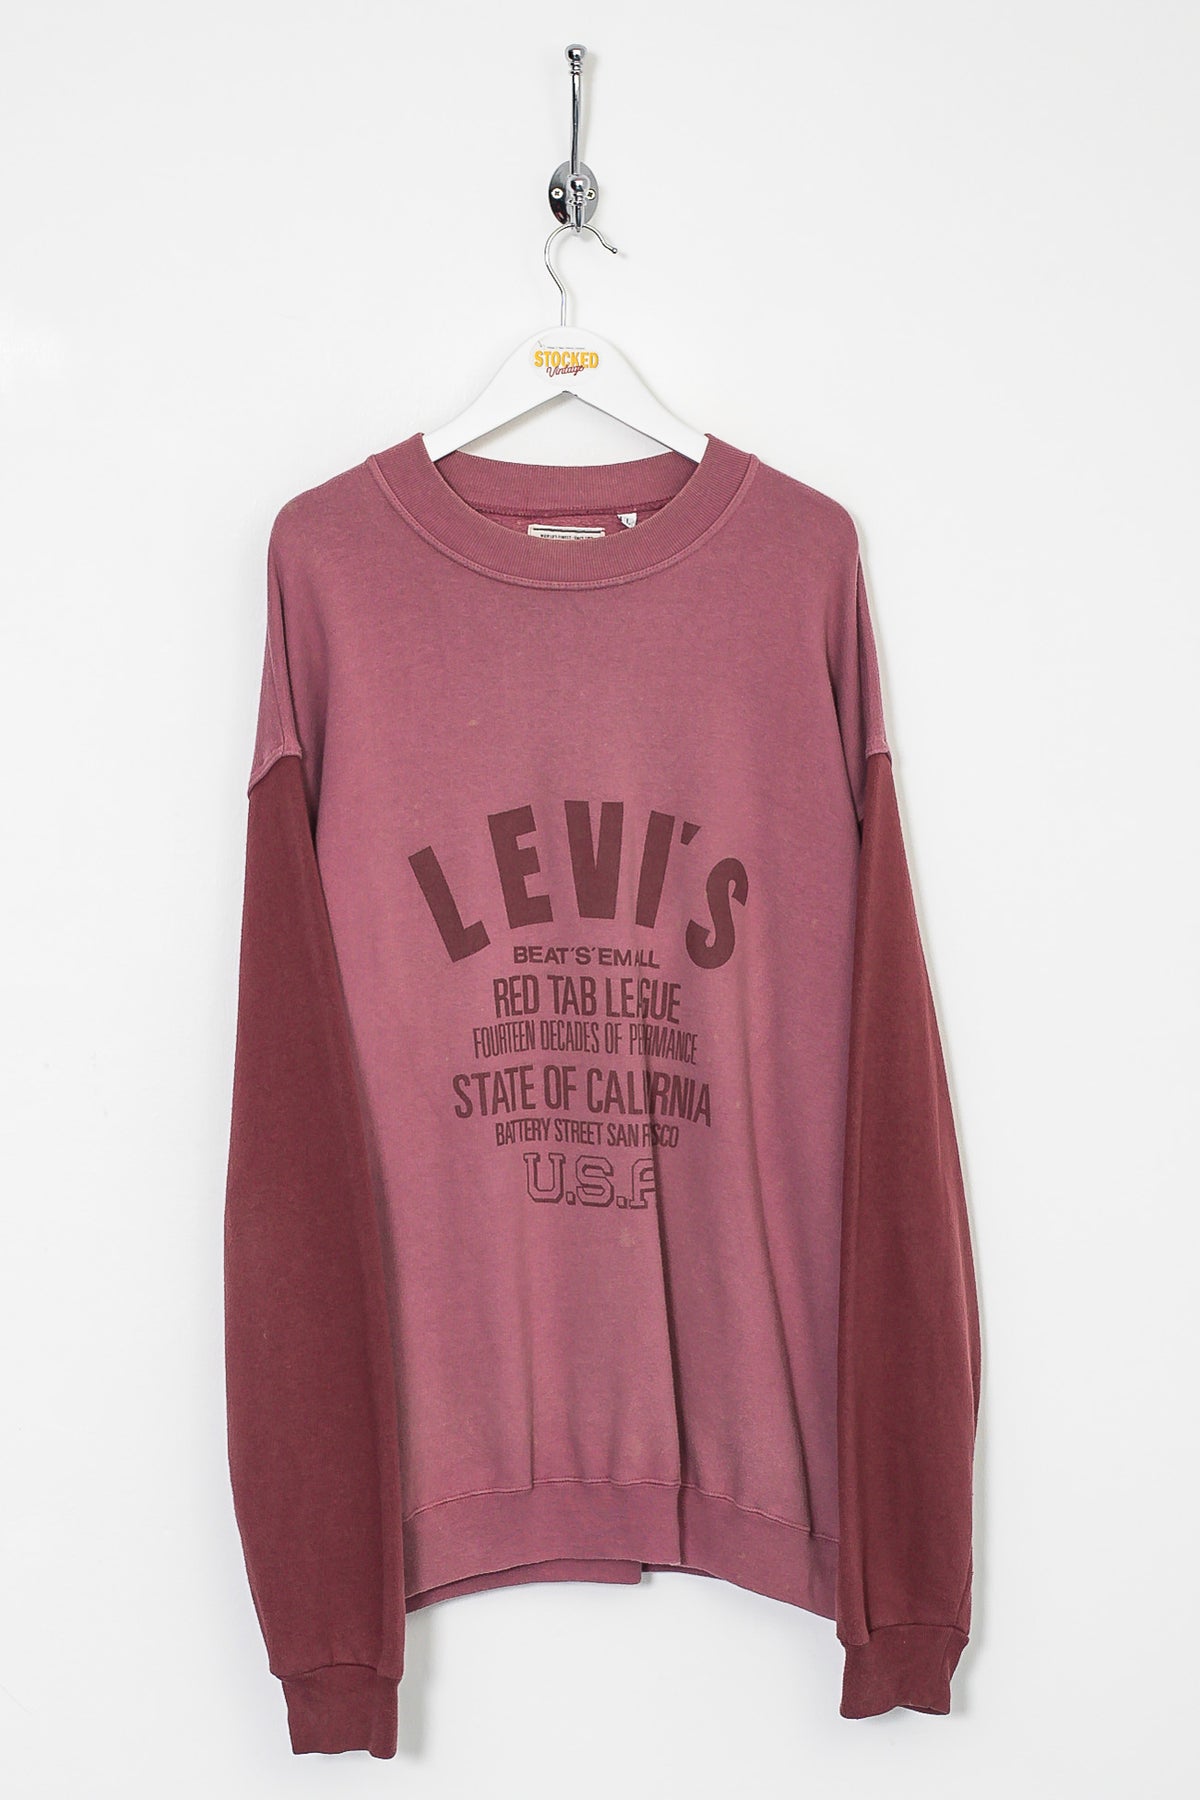 Levi's Sweatshirt (L)